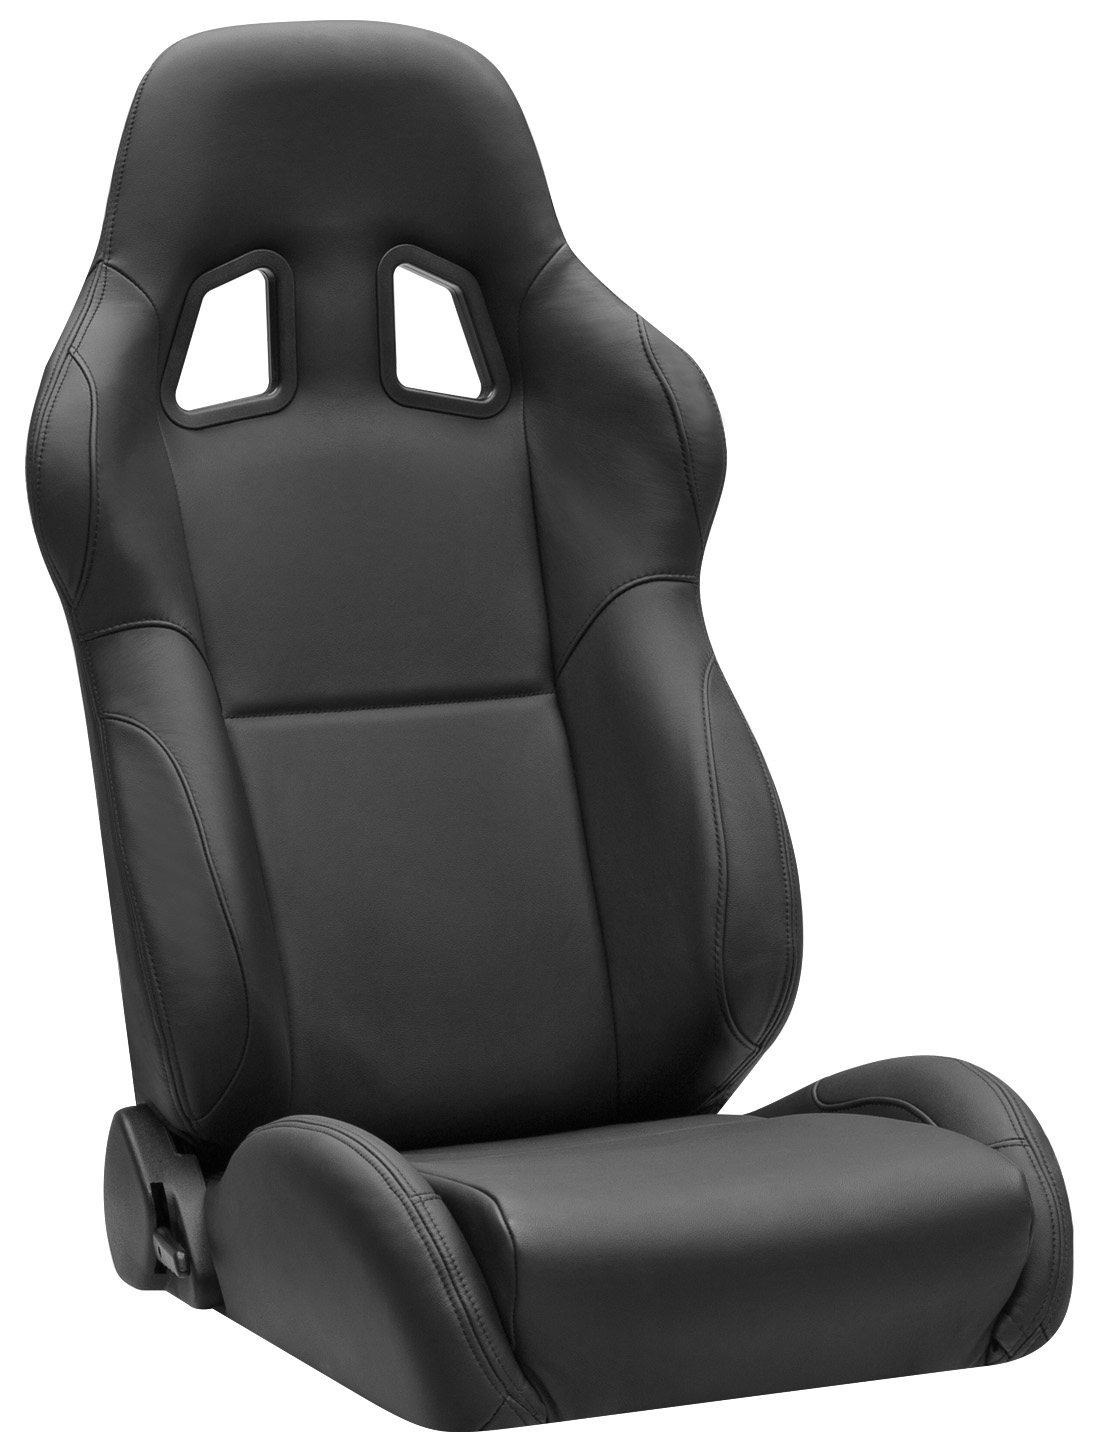 Corbeau A4 Racing Seat, Black Leather, L60091PR